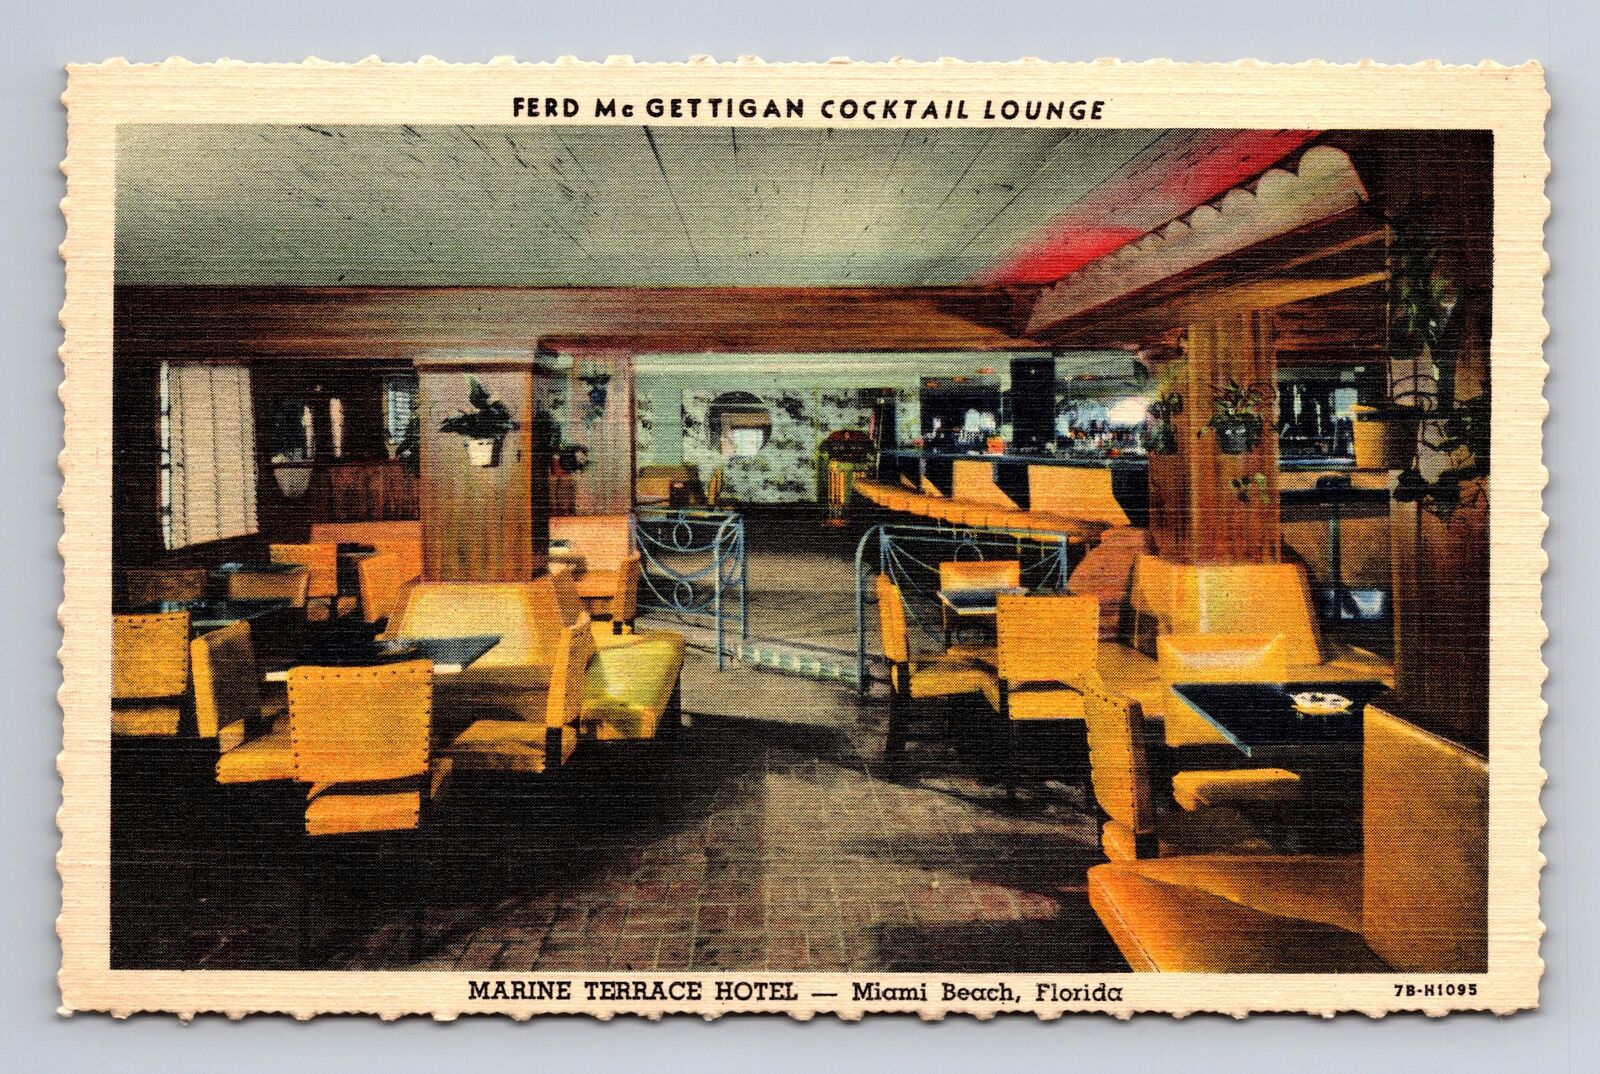 1947 Postcard Miami Beach Ferd McGettigan Cocktail Lounge Marine Terrace Hotel